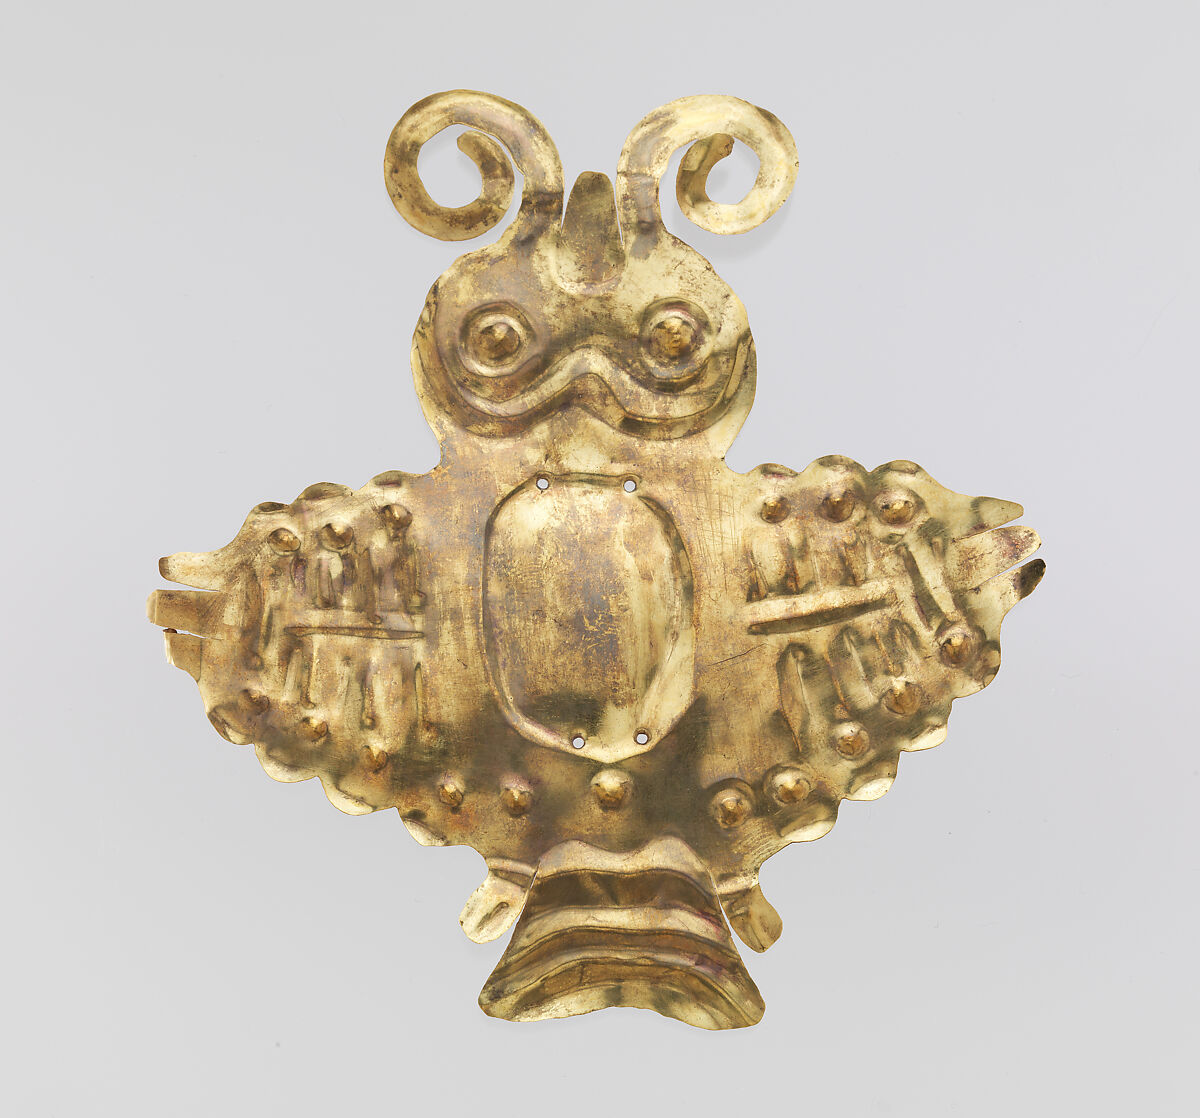 Bird-shaped ornament, Nasca artist(s), Gold, Nasca 